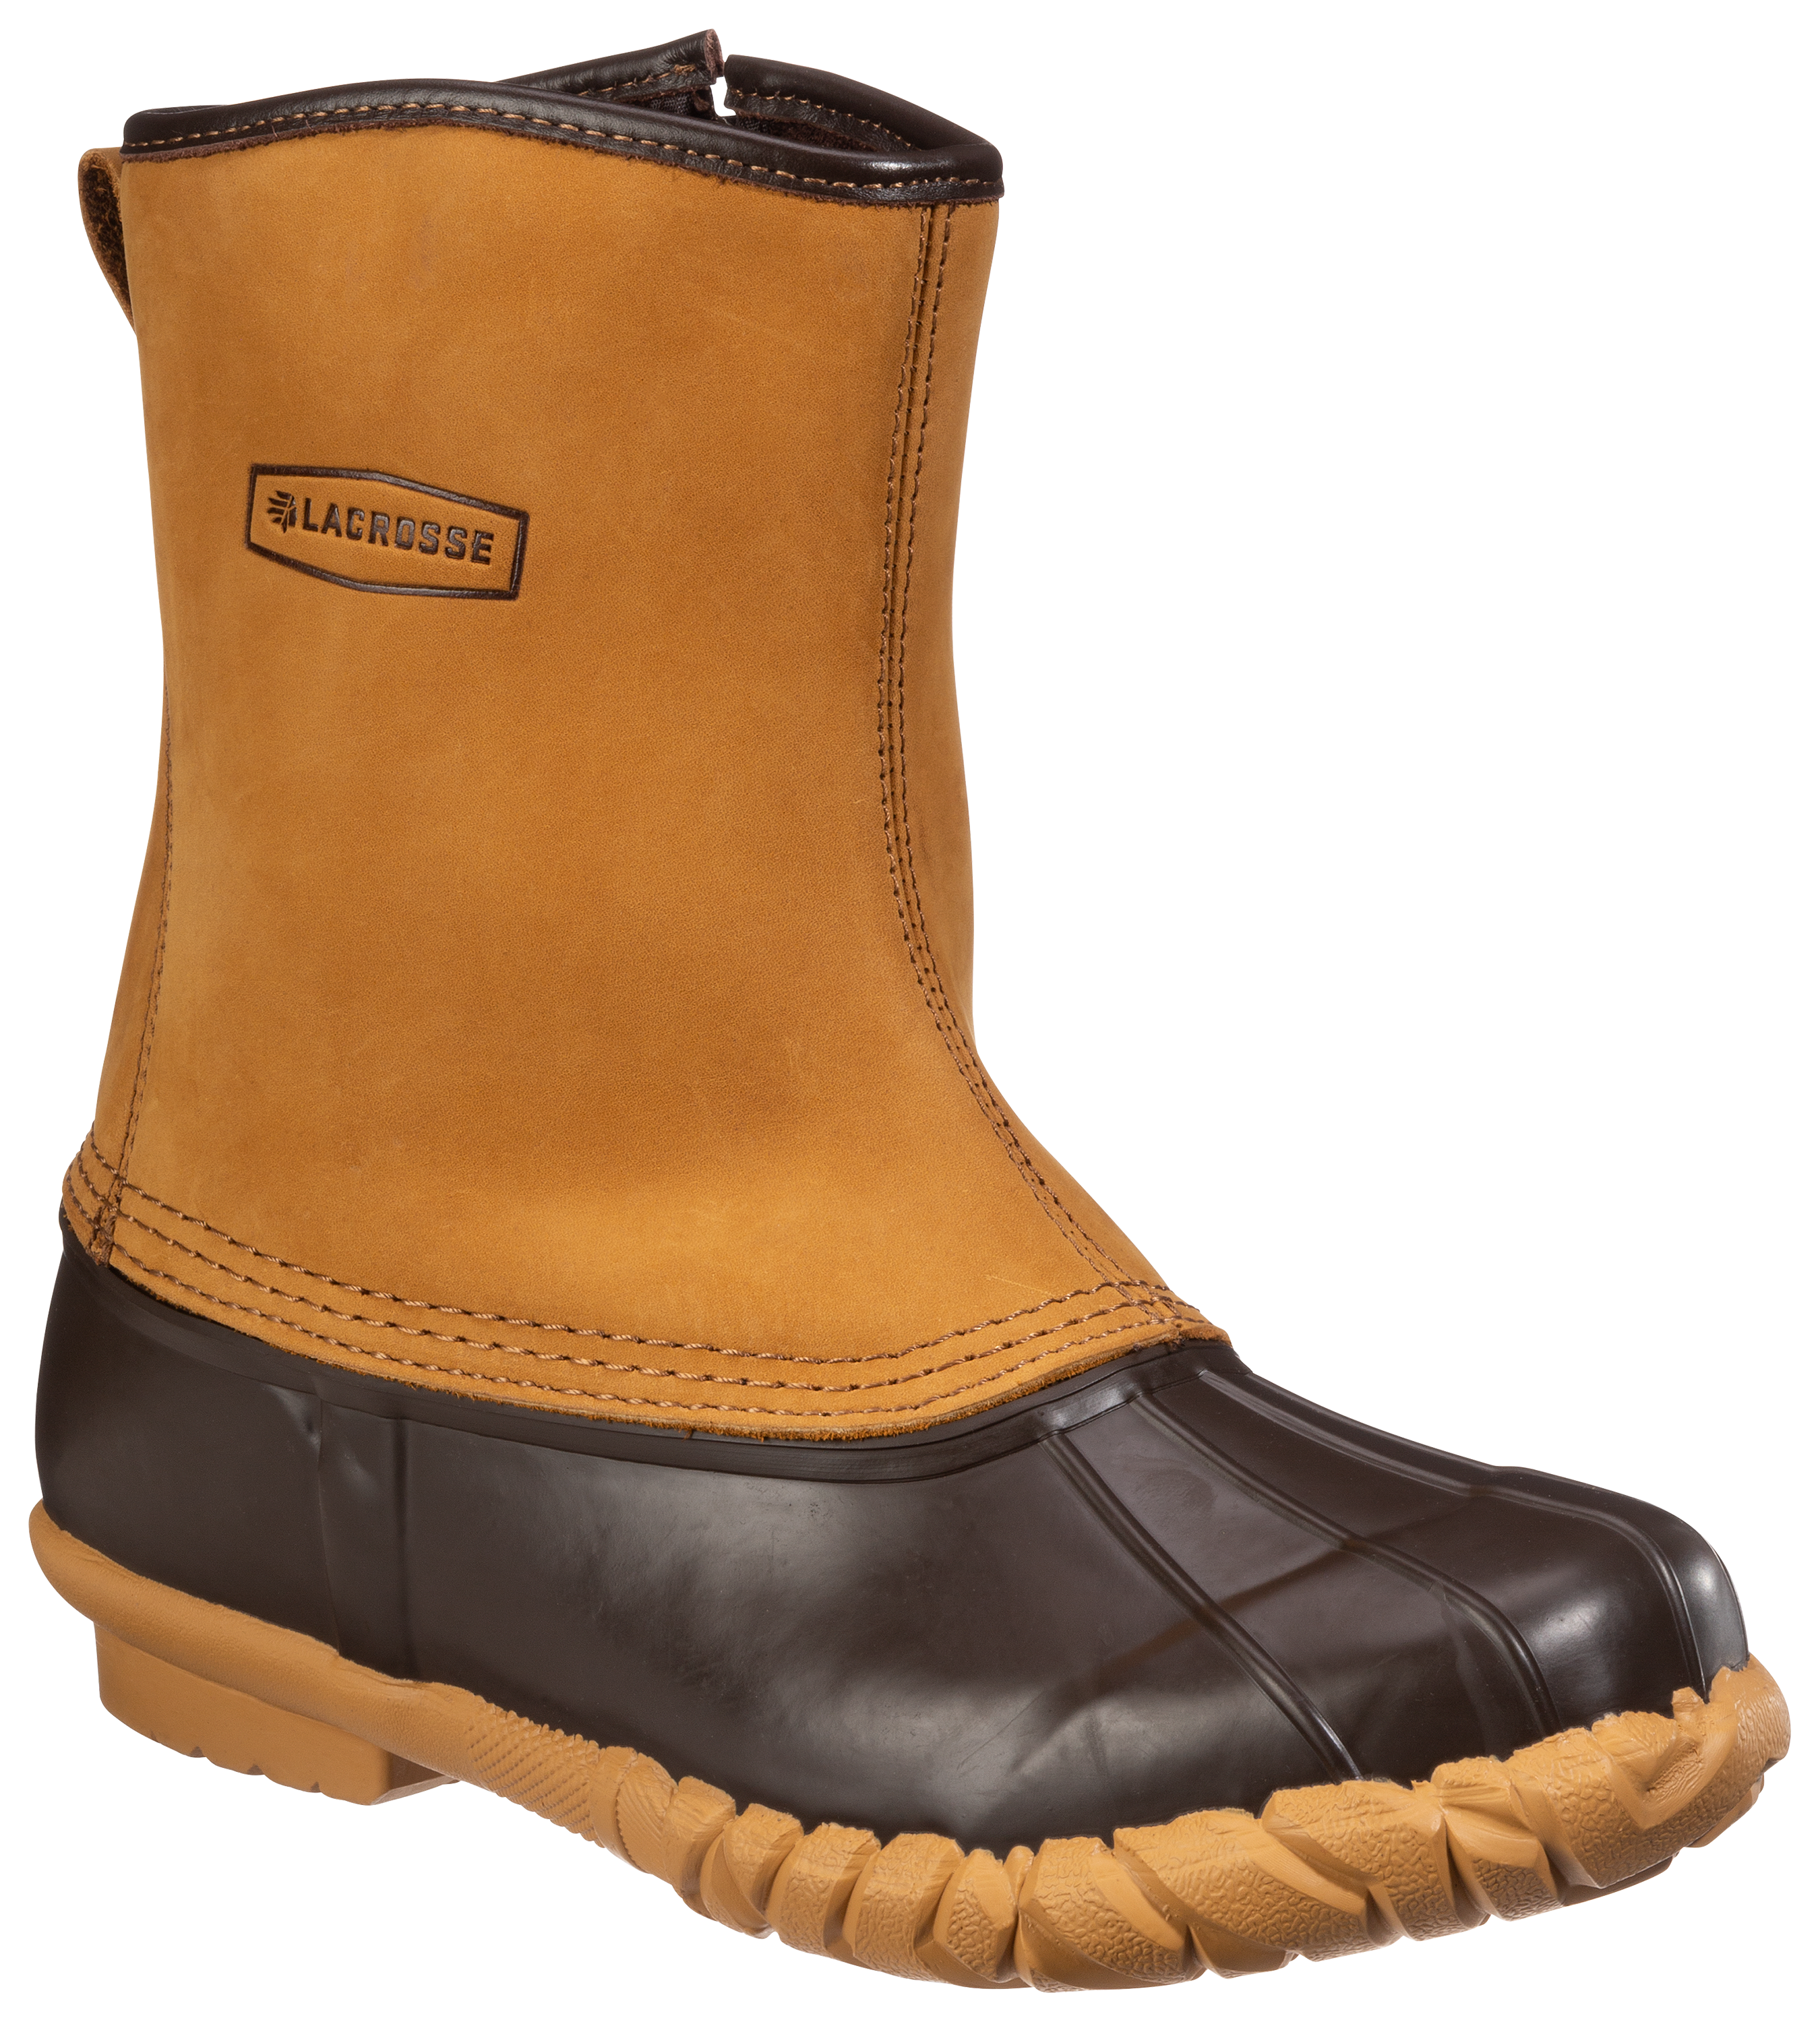 LaCrosse Mesquite II Insulated Waterproof Side-Zip Boots for Men - Brown - 8M